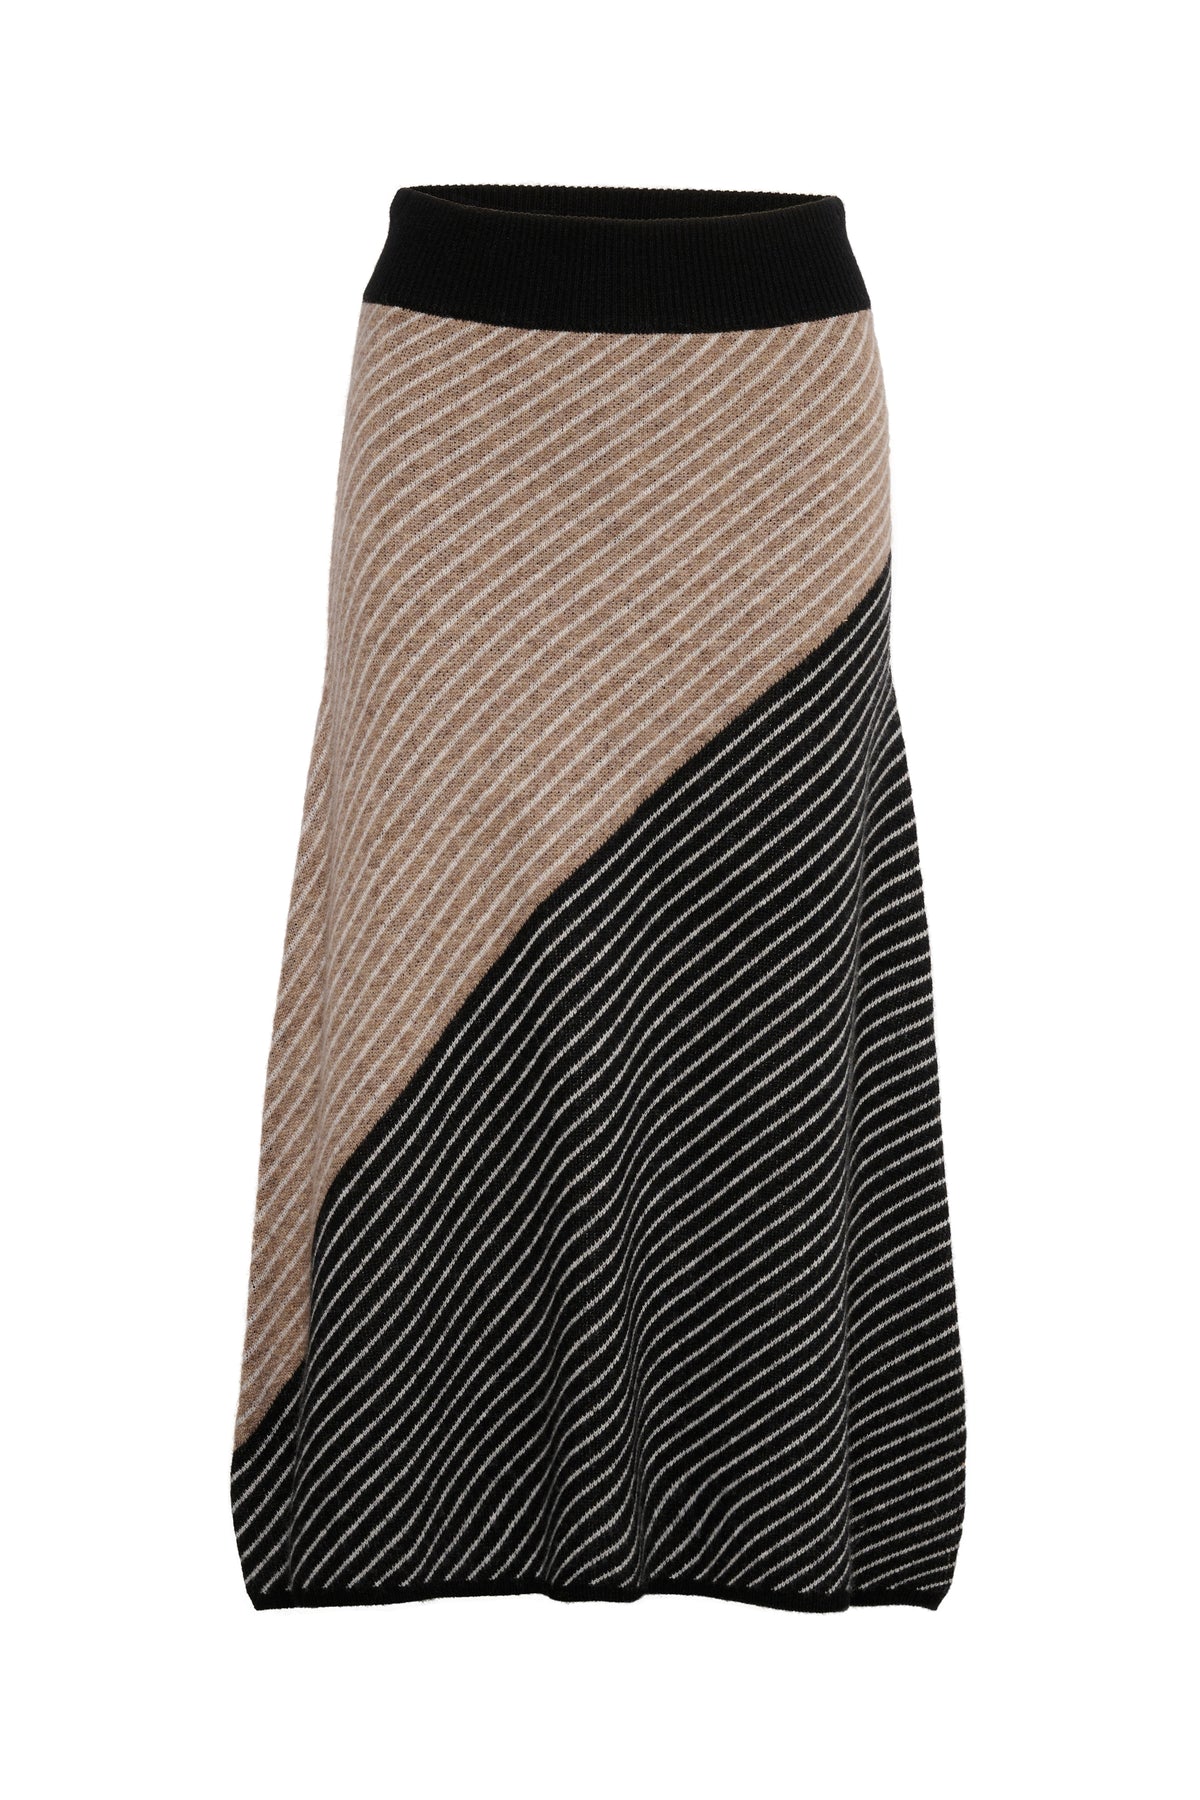 InWear Rance Mocha Grey/Black Knitted Midi Skirt, 30108599